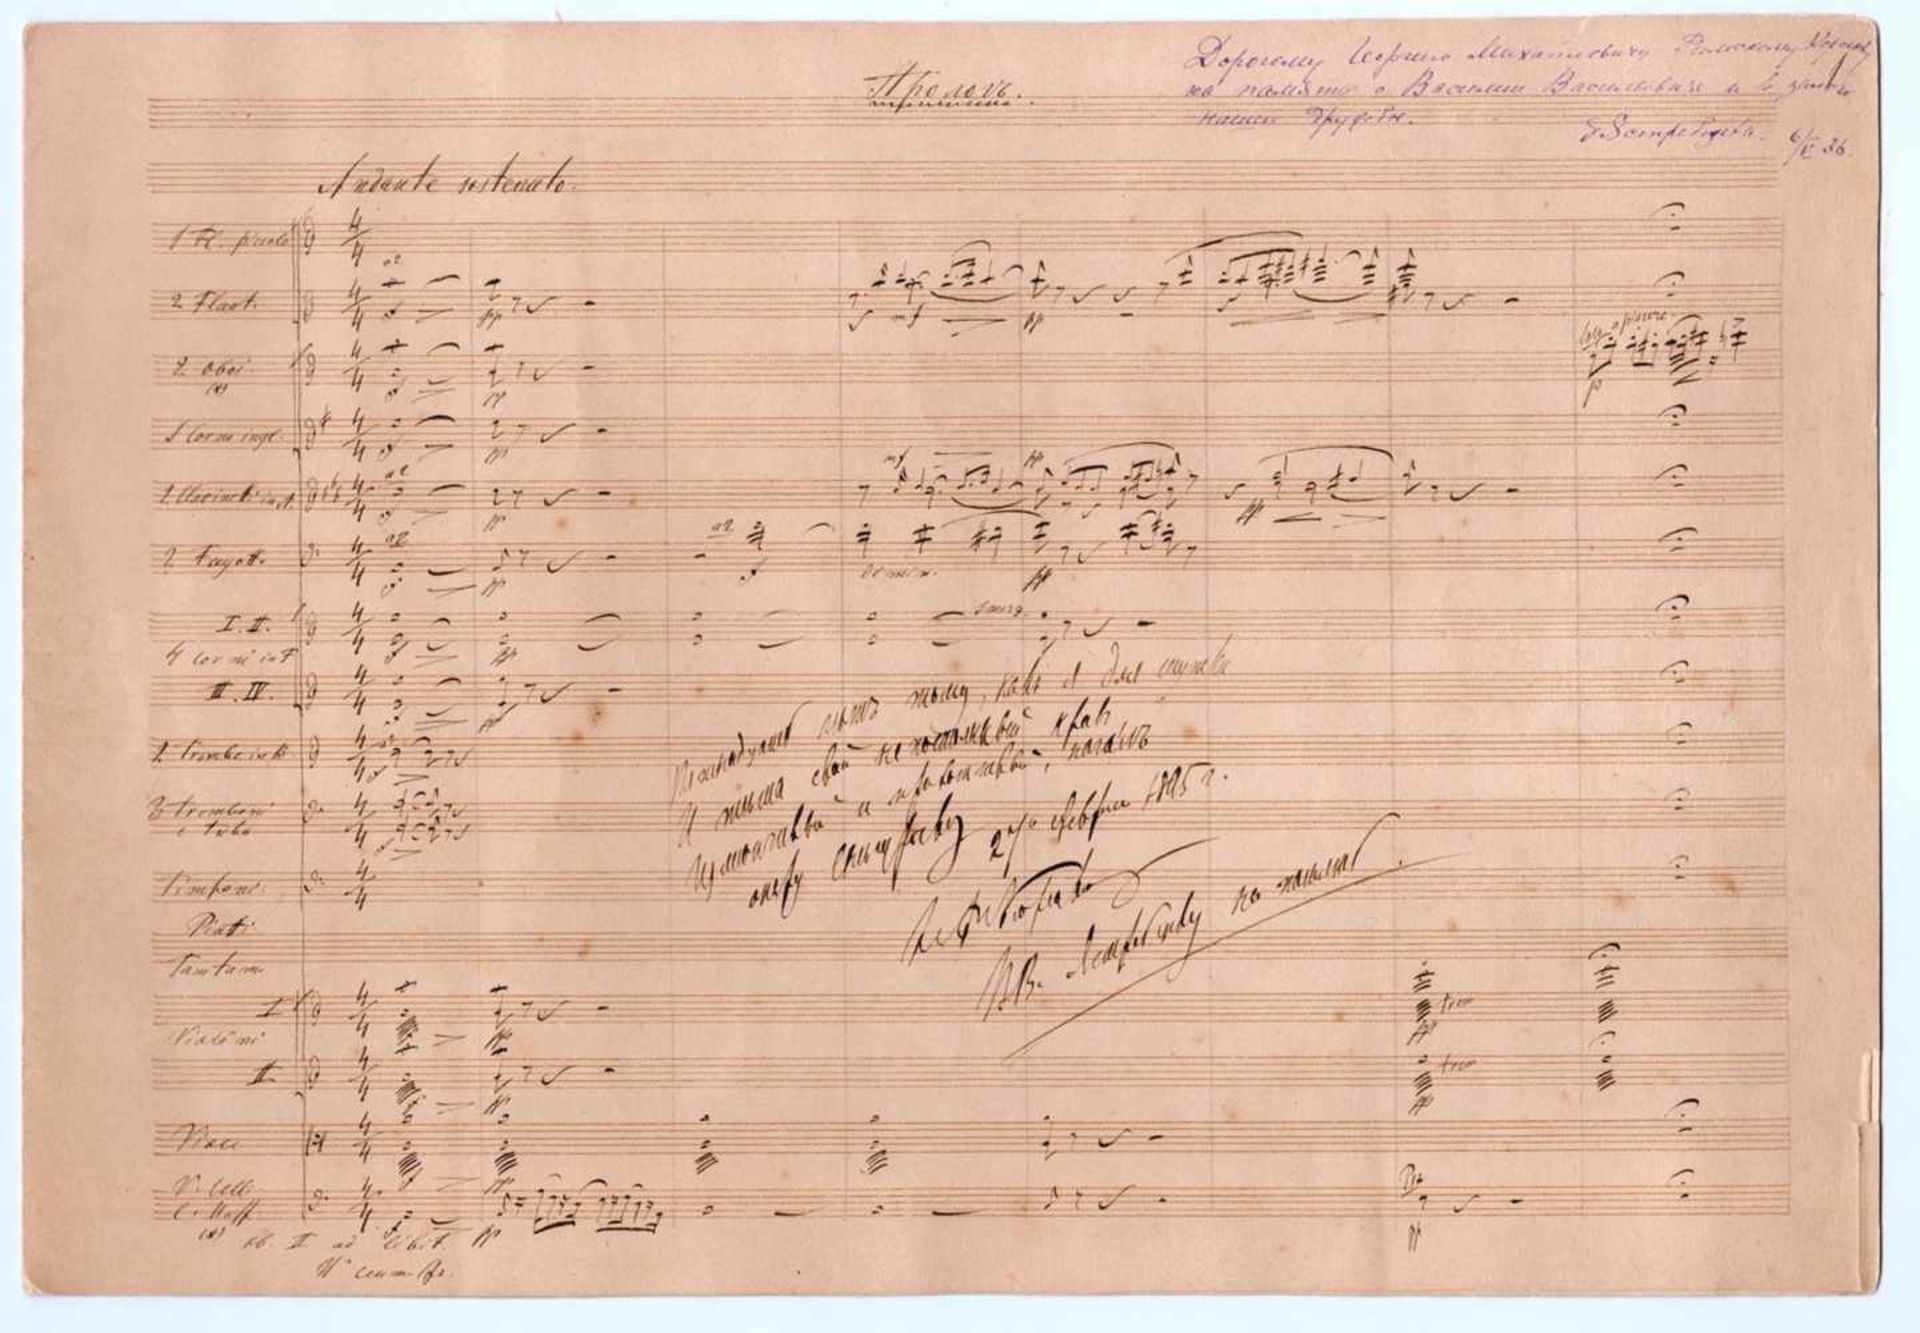 Rimsky-Korsakov, Nikolai Andreyevich. Autograph music manuscript. Opera "Snegurochka (Snow Maiden)".